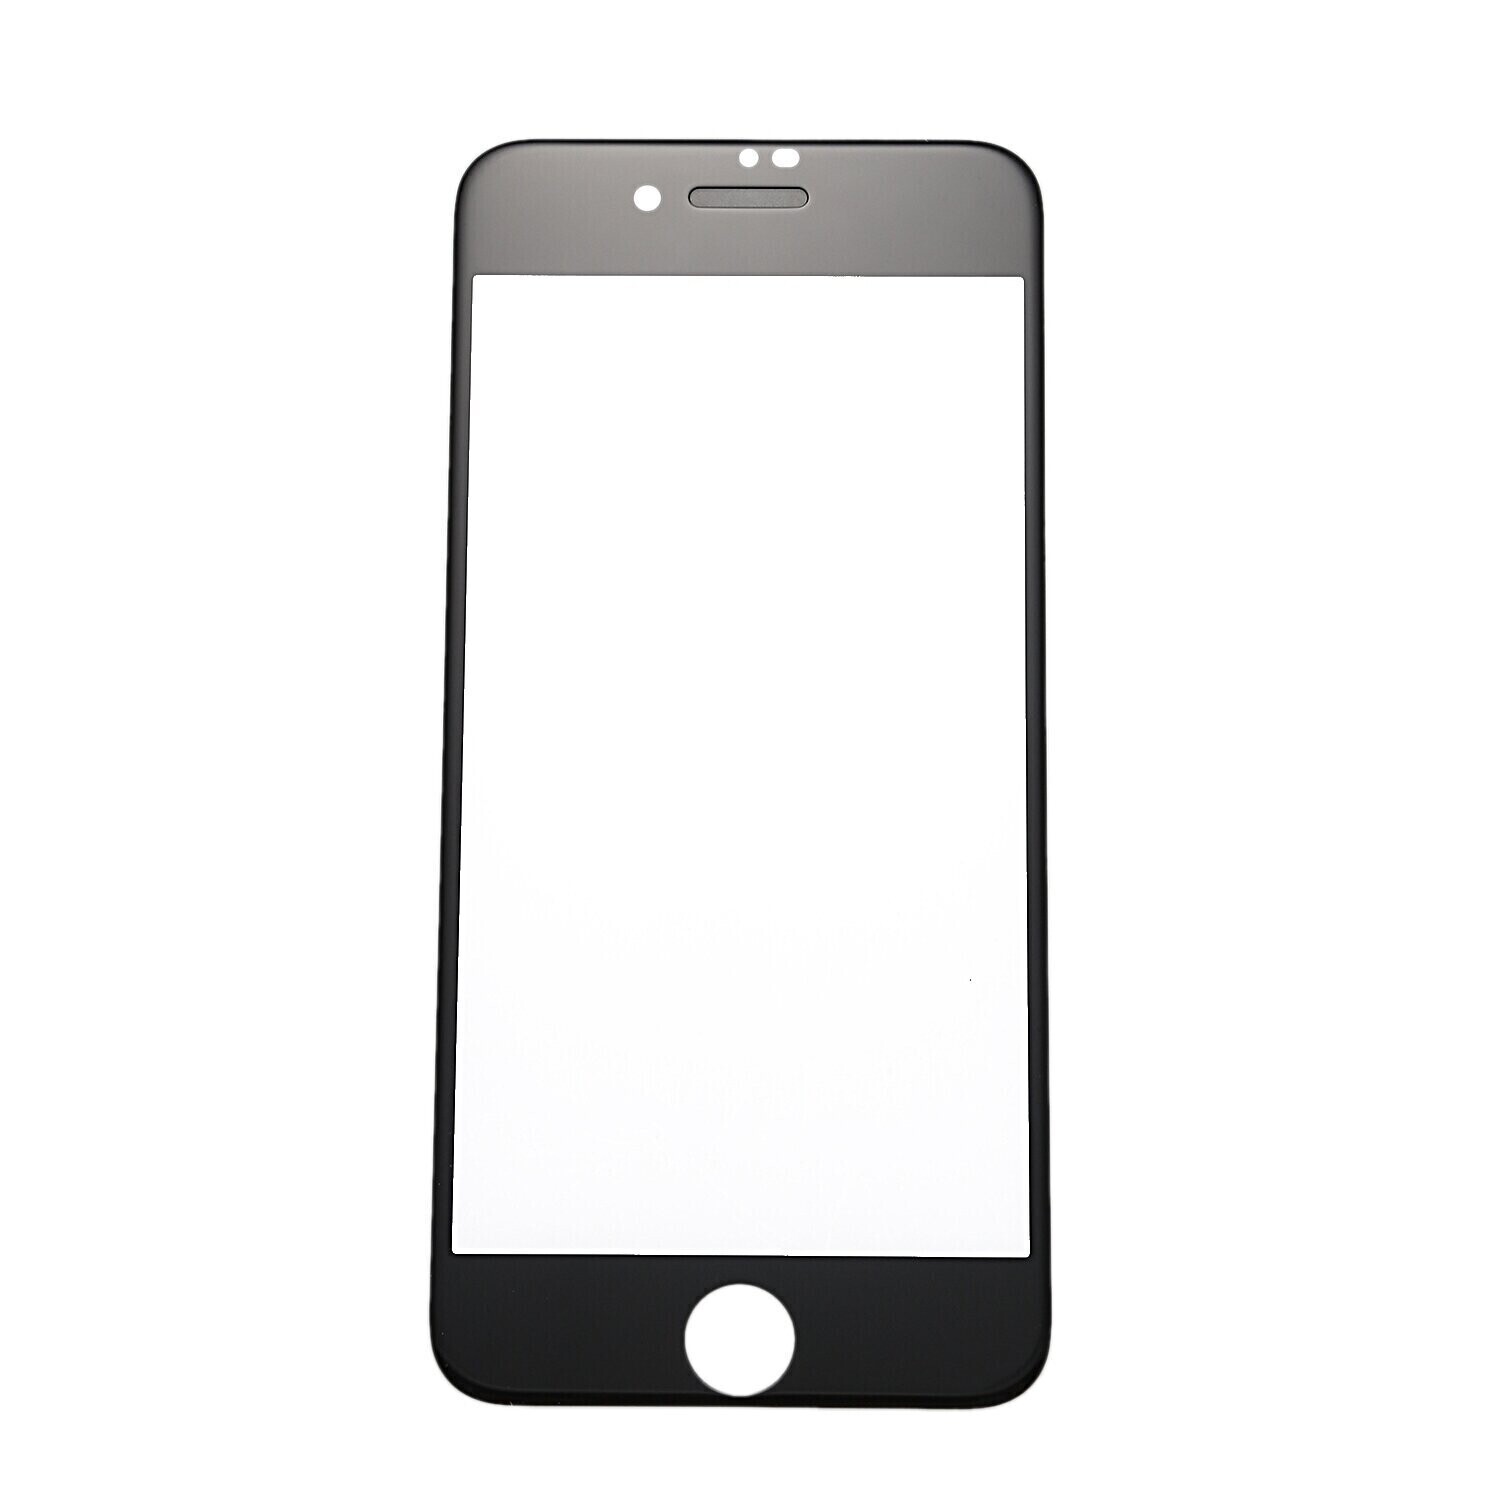 Komass iPhone 6/7/8 Plus 5.5" Tempered Glass, Anti-Glare Black